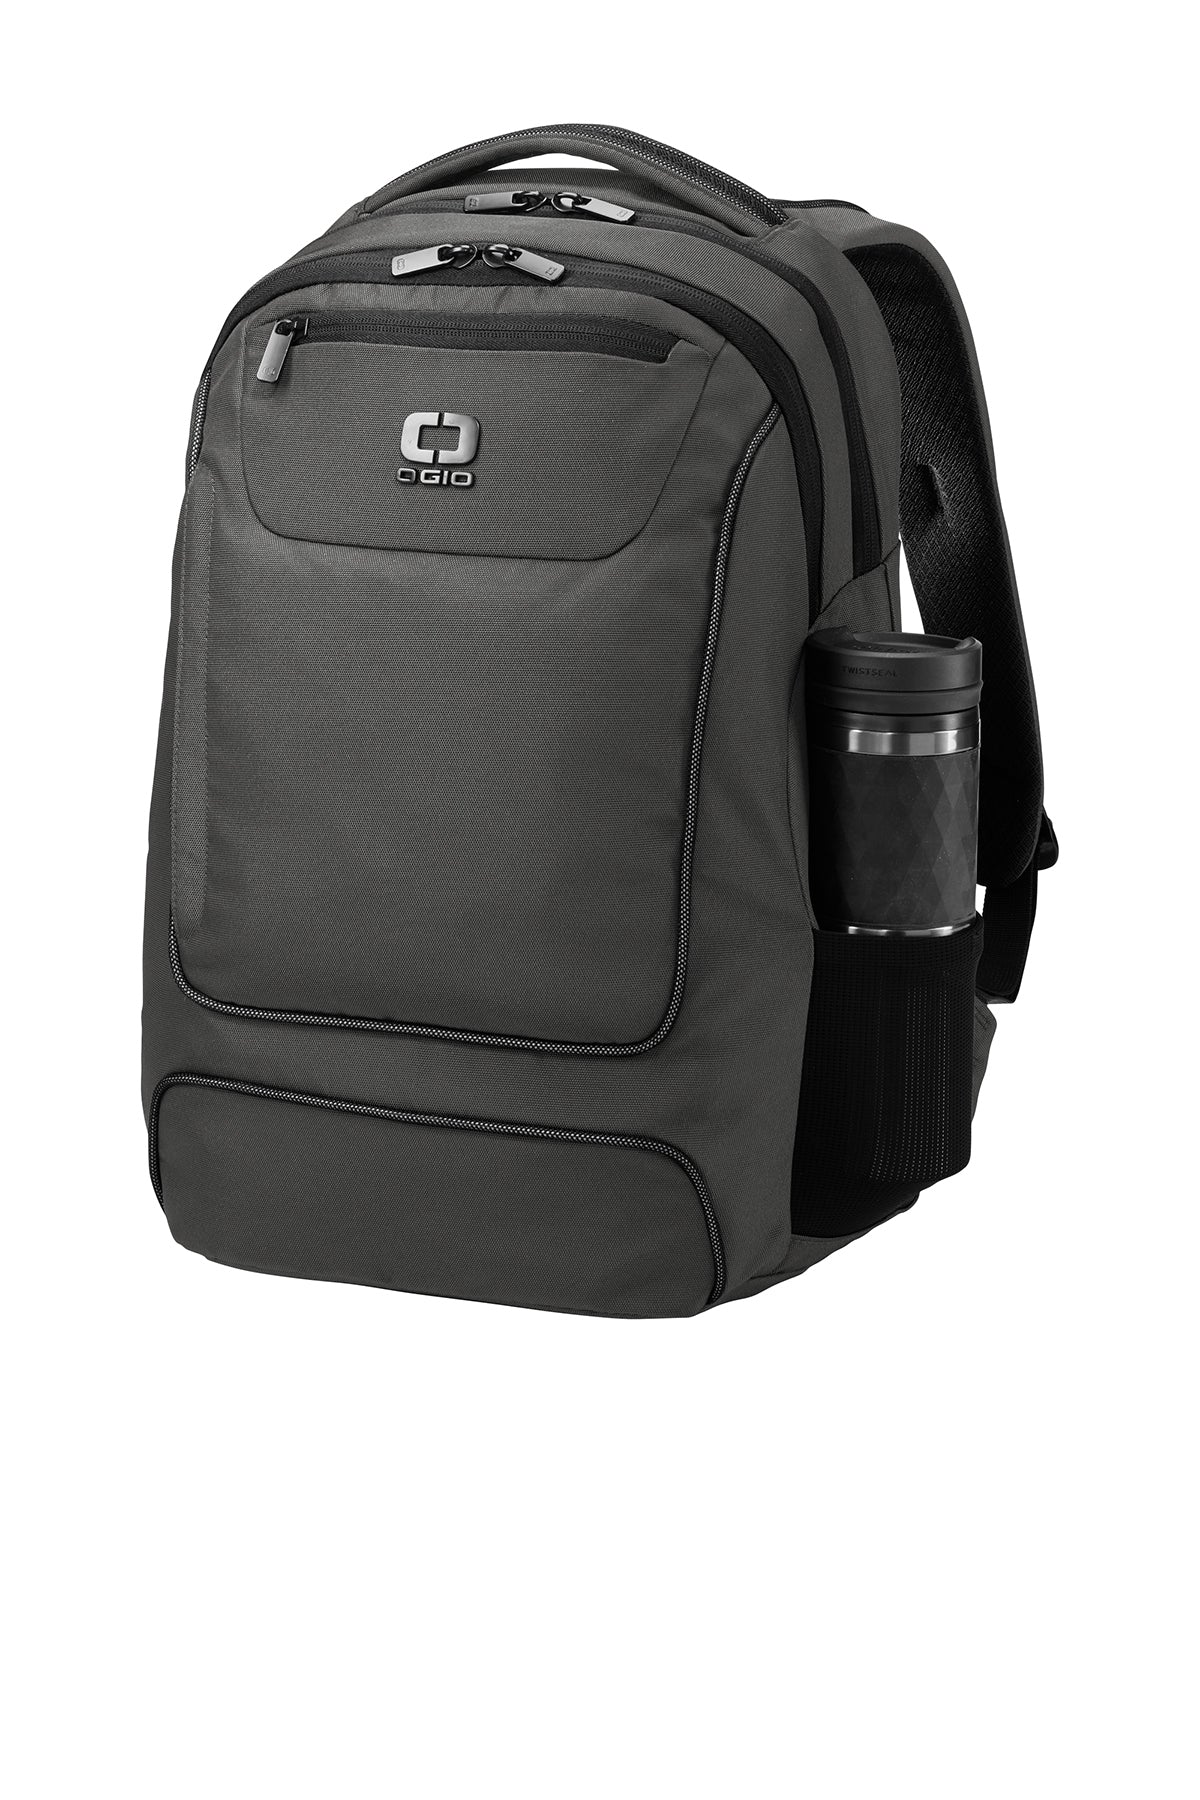 OGIO Range Customzied Backpacks, Tarmac